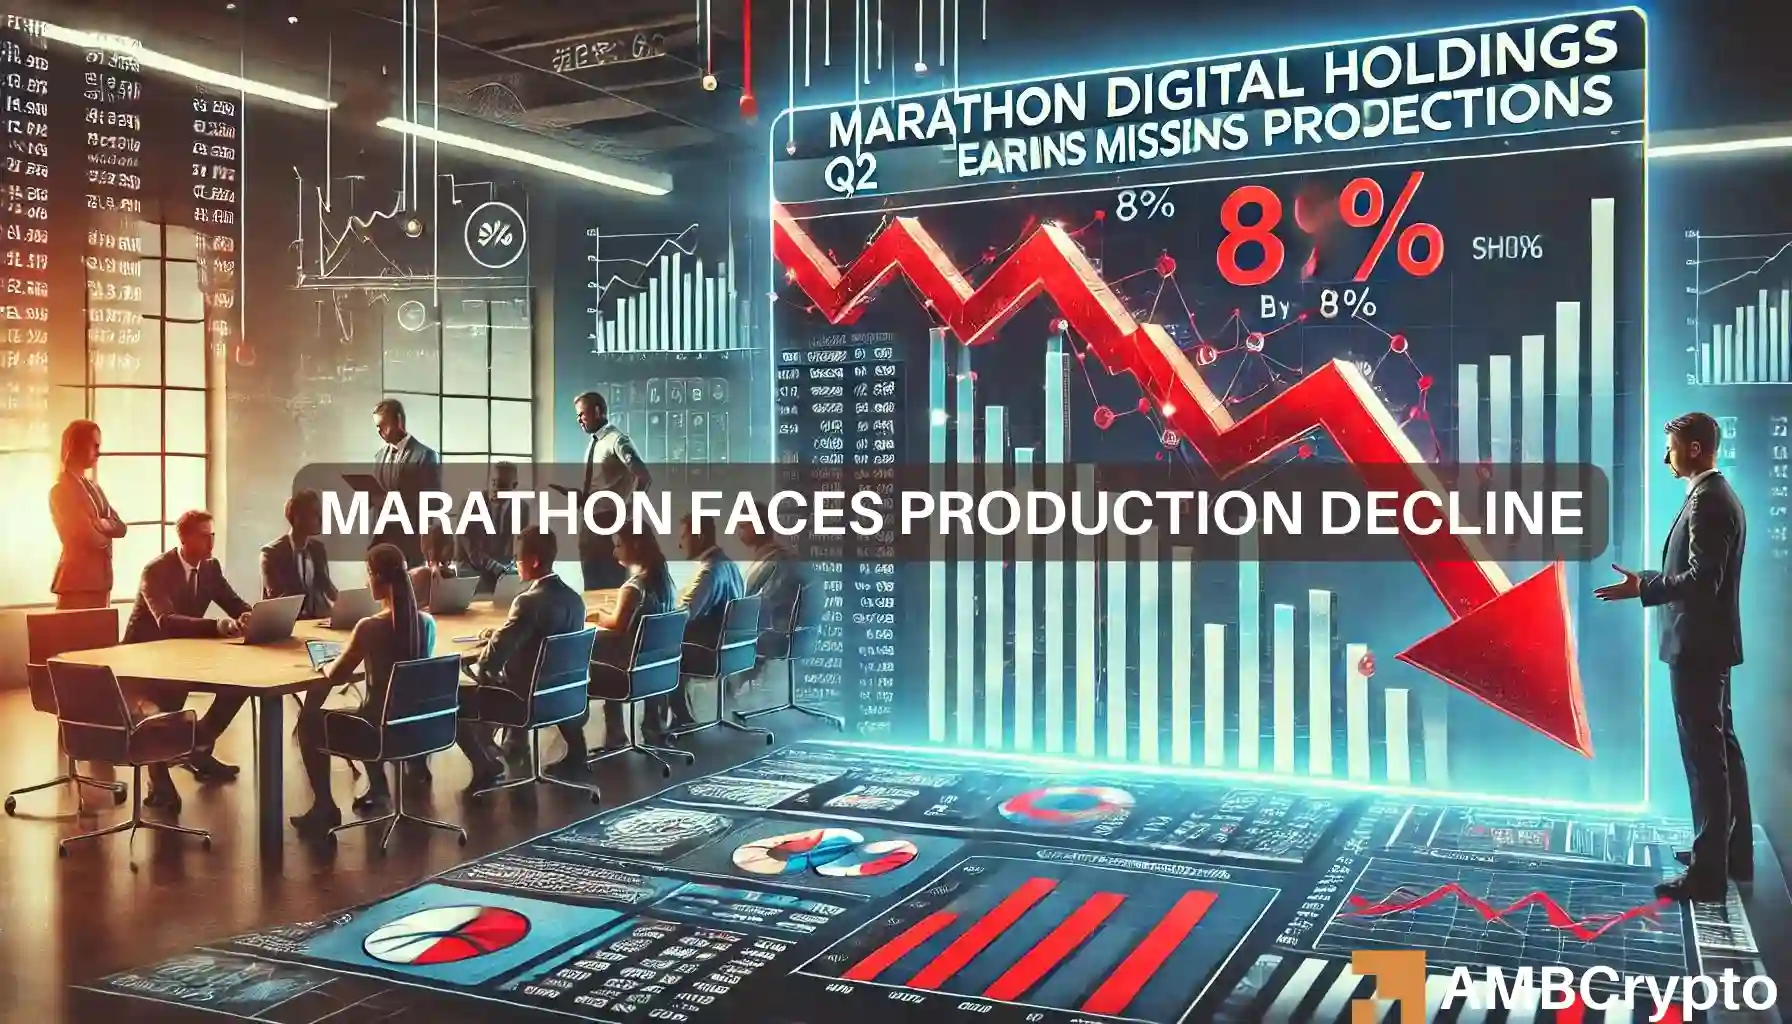 Bitcoin mining firm Marathon Digital misses Q2 projections, shares drop 8%